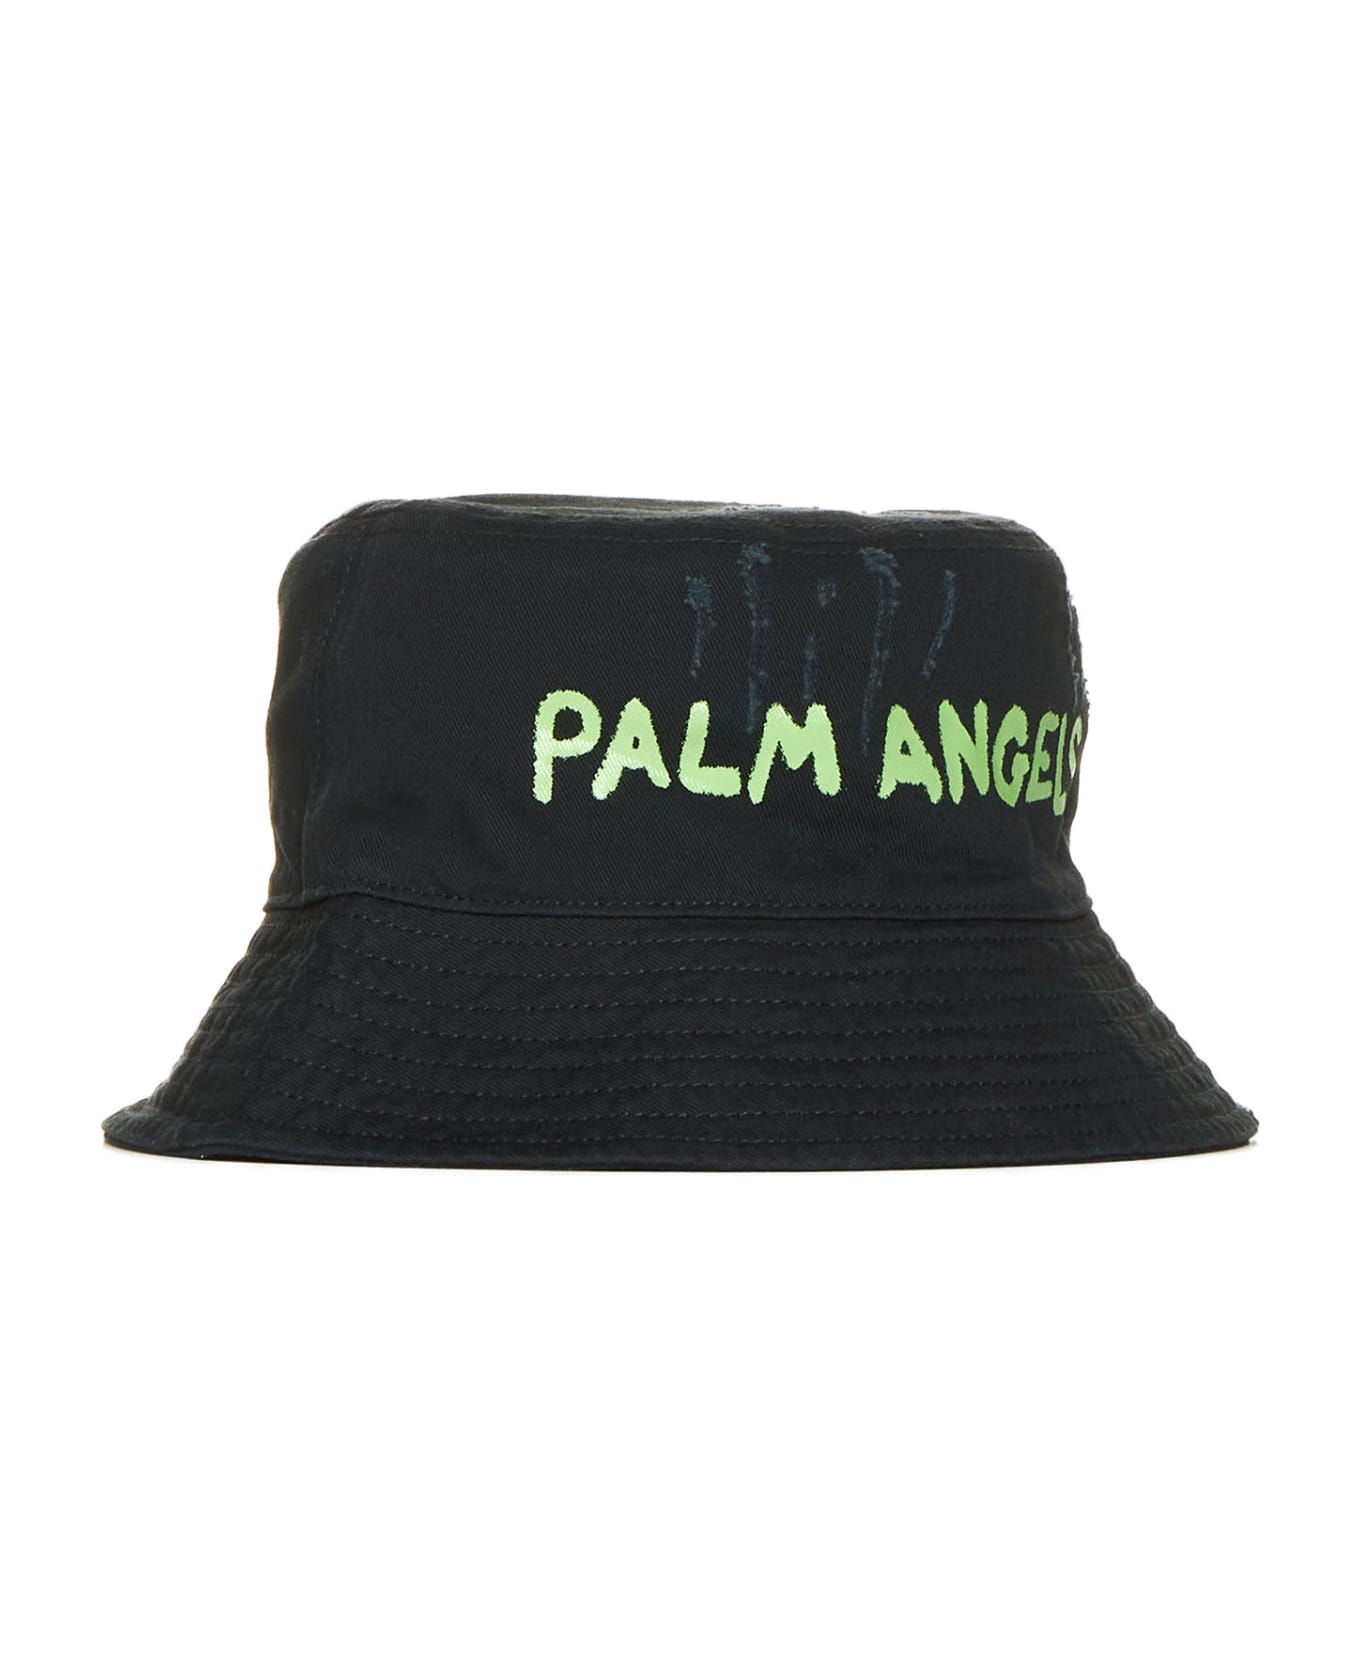 Palm Angels Logo Printed Distressed Bucket Hat - Black green fl